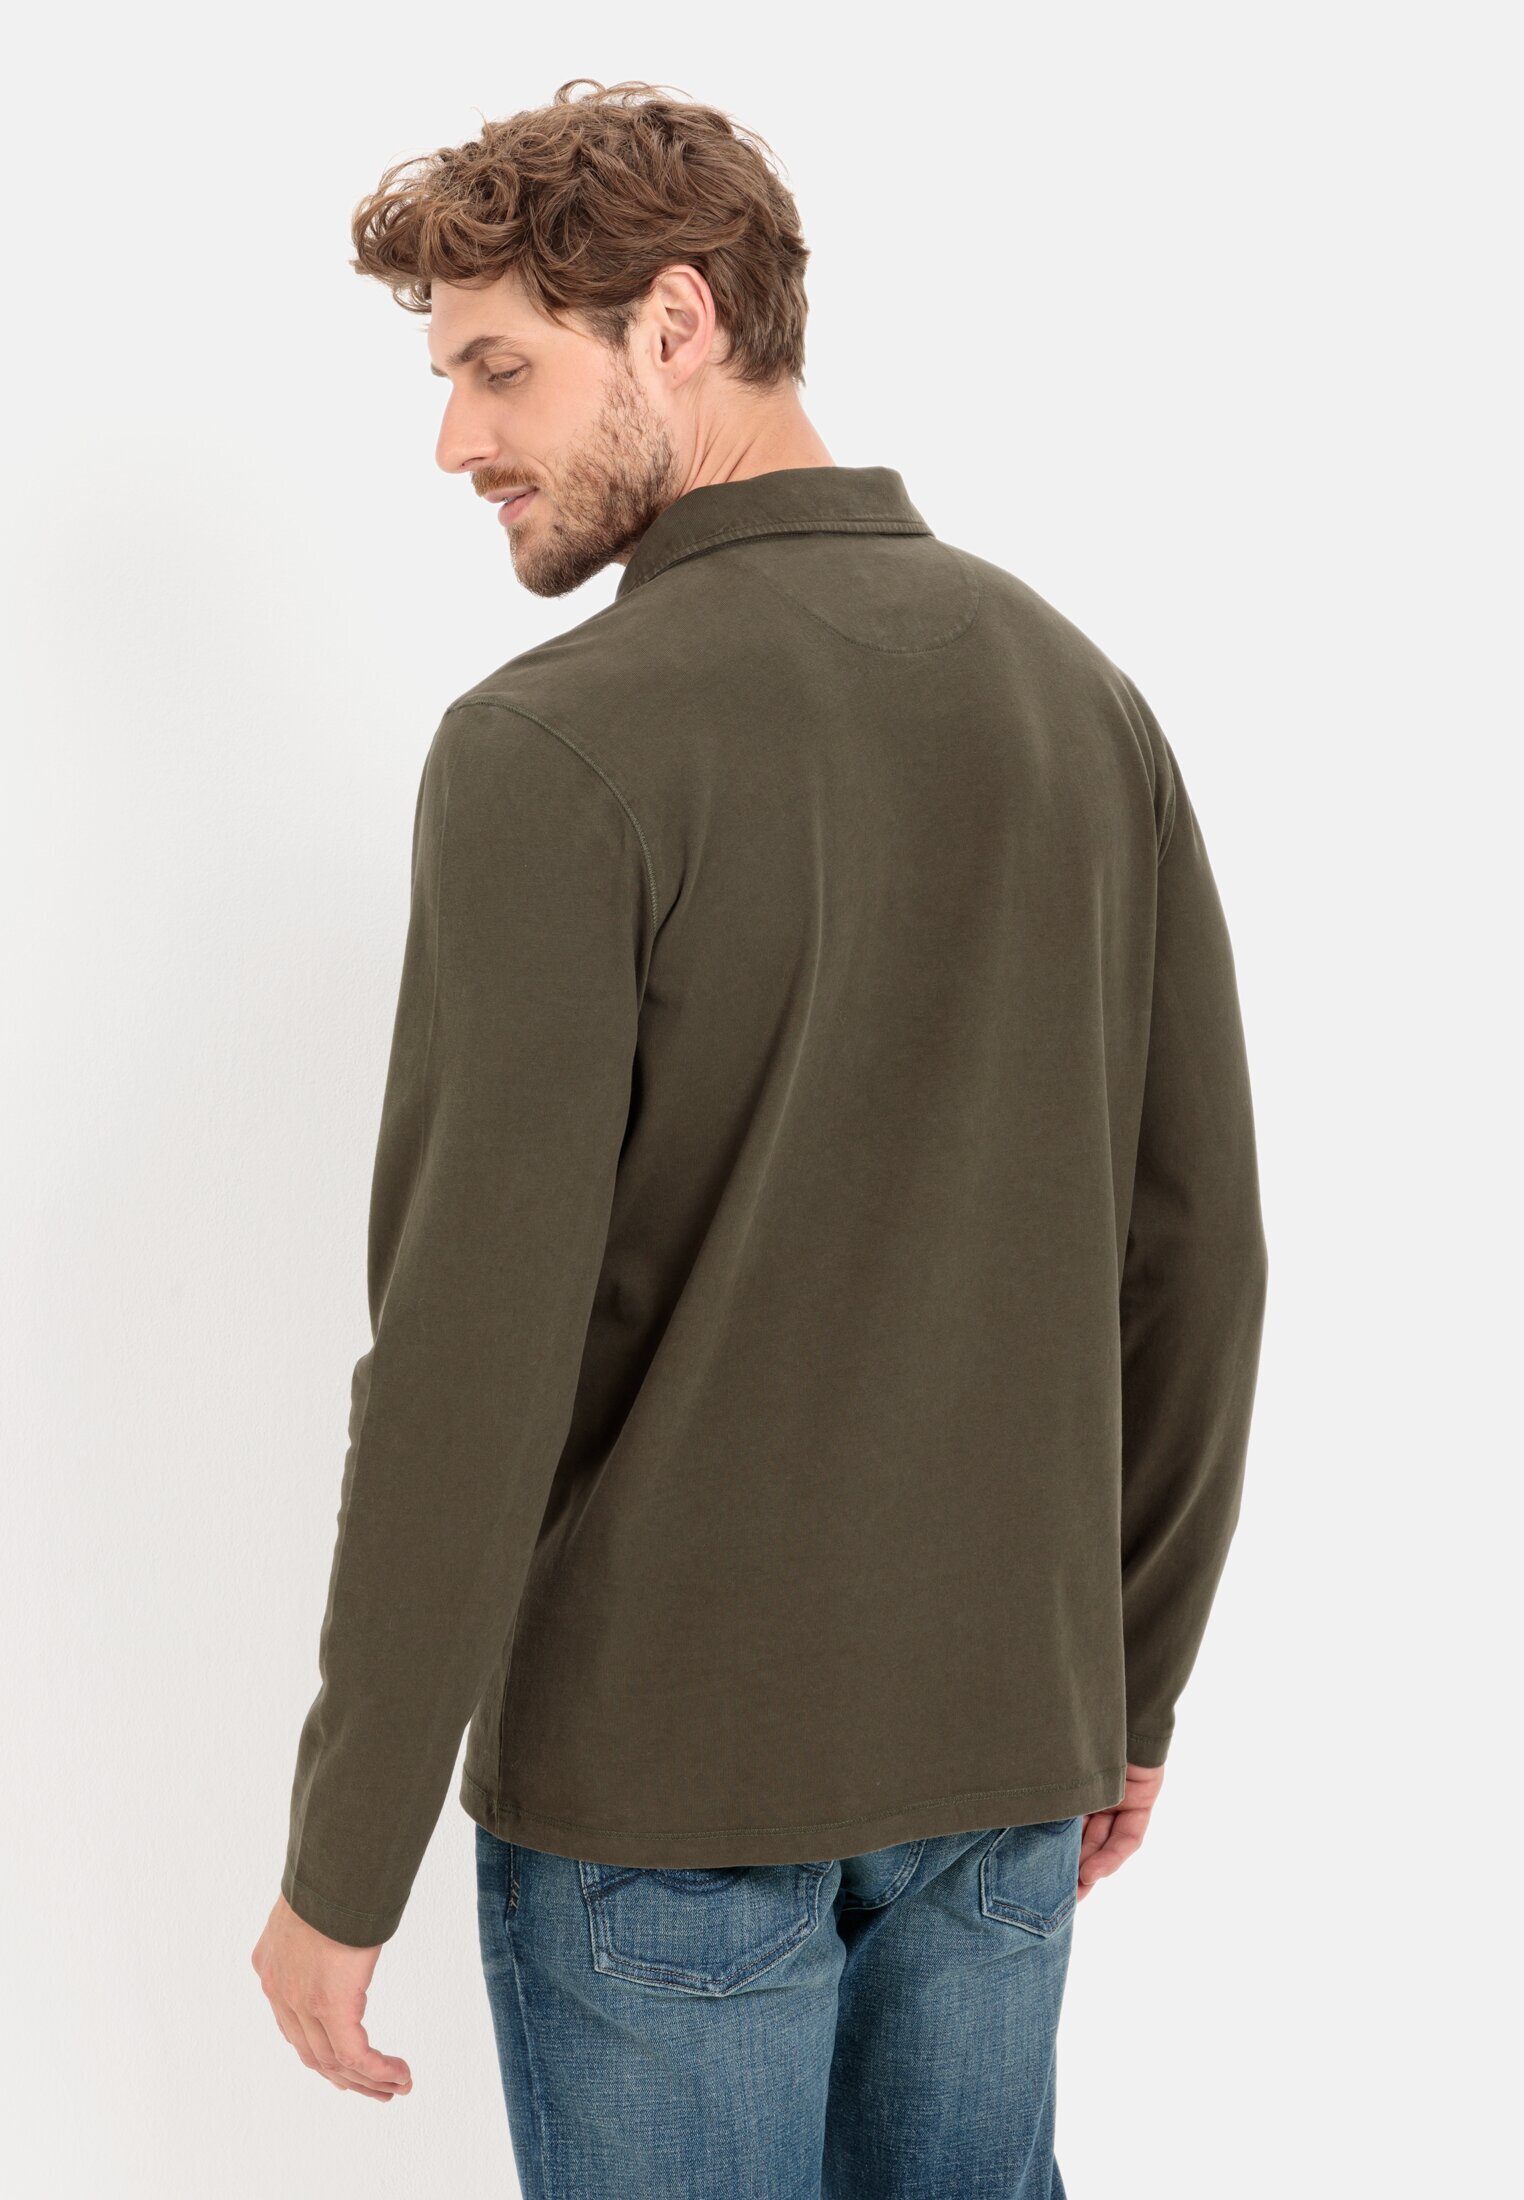 Poloshirt Dunkel reiner camel Baumwolle active aus Shirts_Langarm-Poloshirt khaki